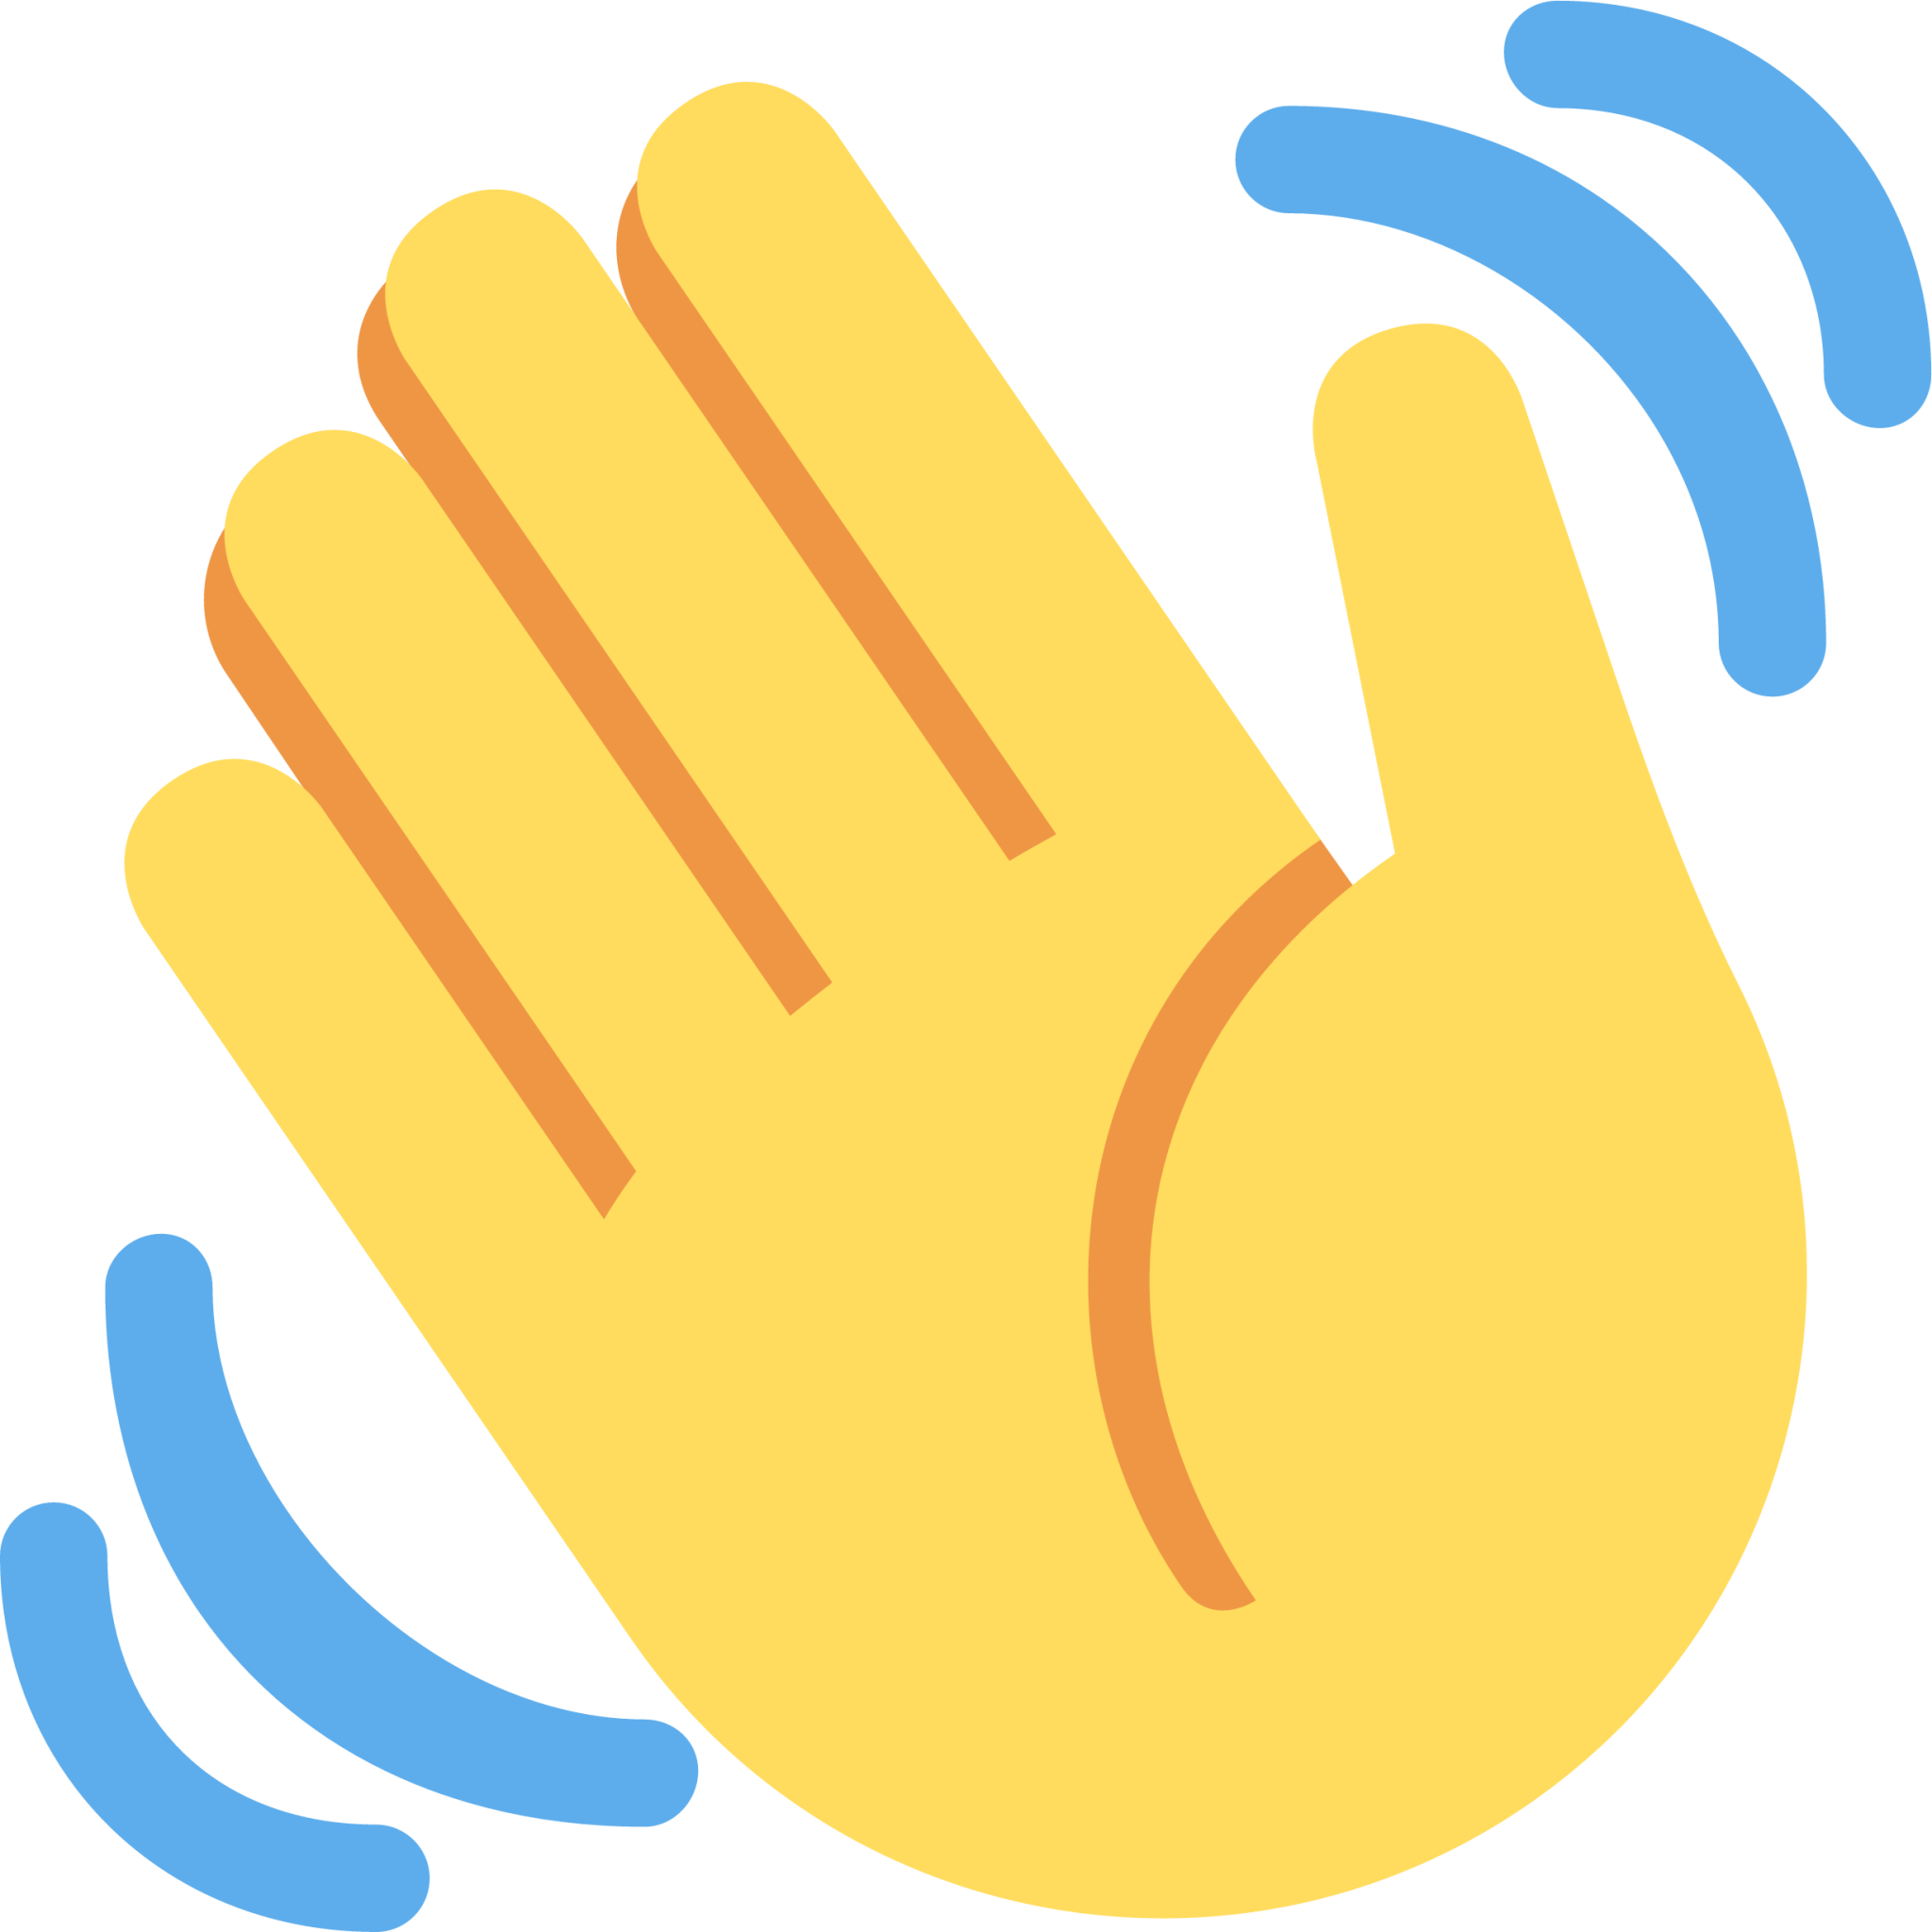 waving hand sign emoji